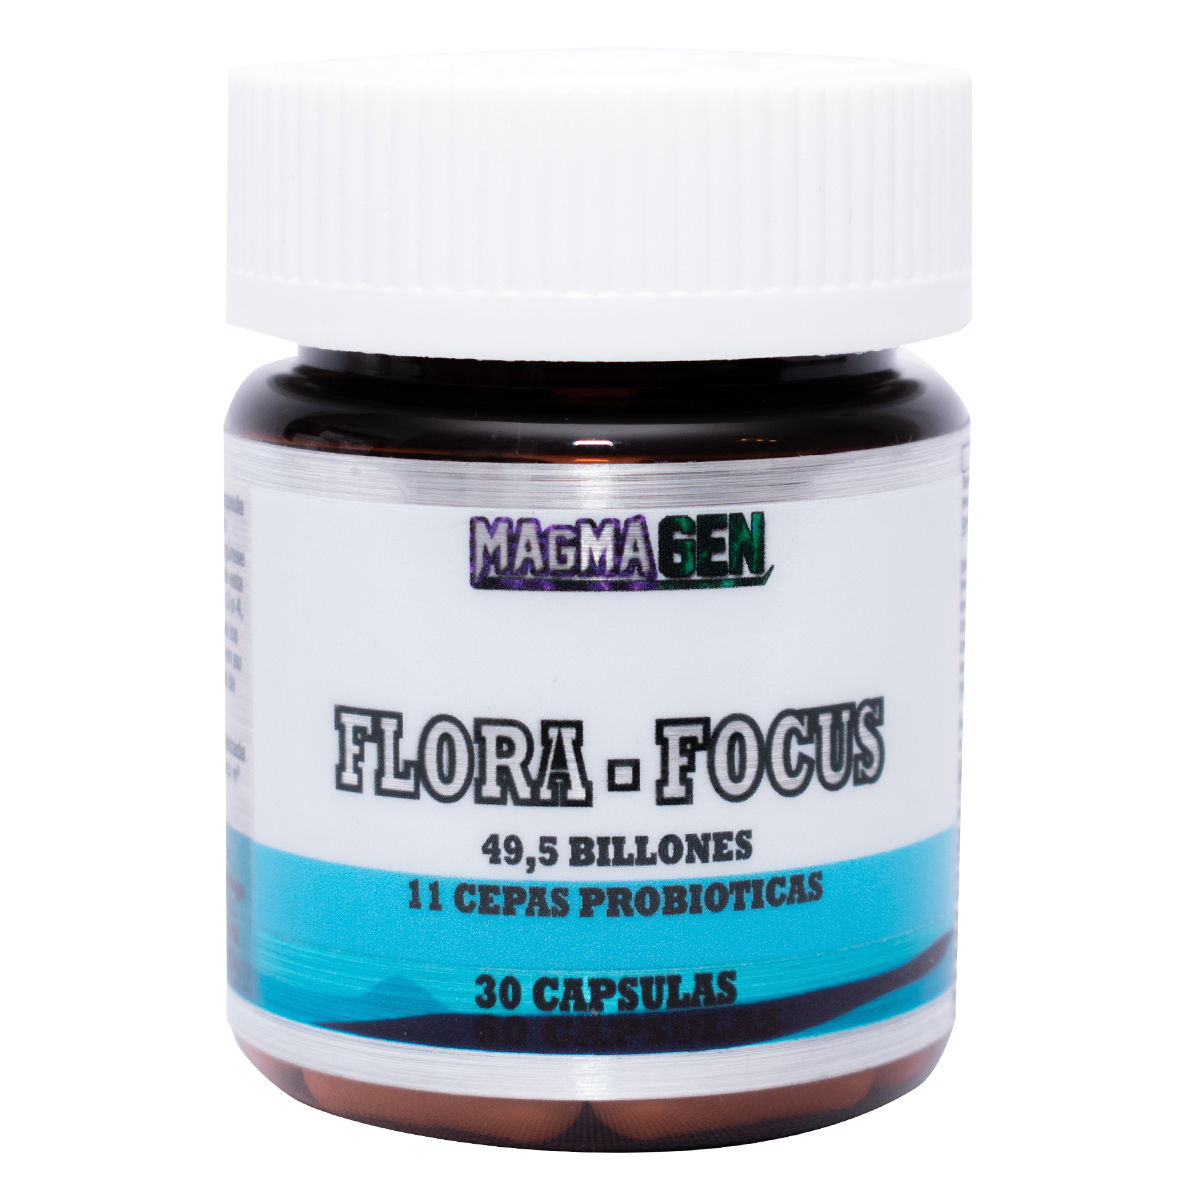 Flora-Focus probiotico 49,5 billones 